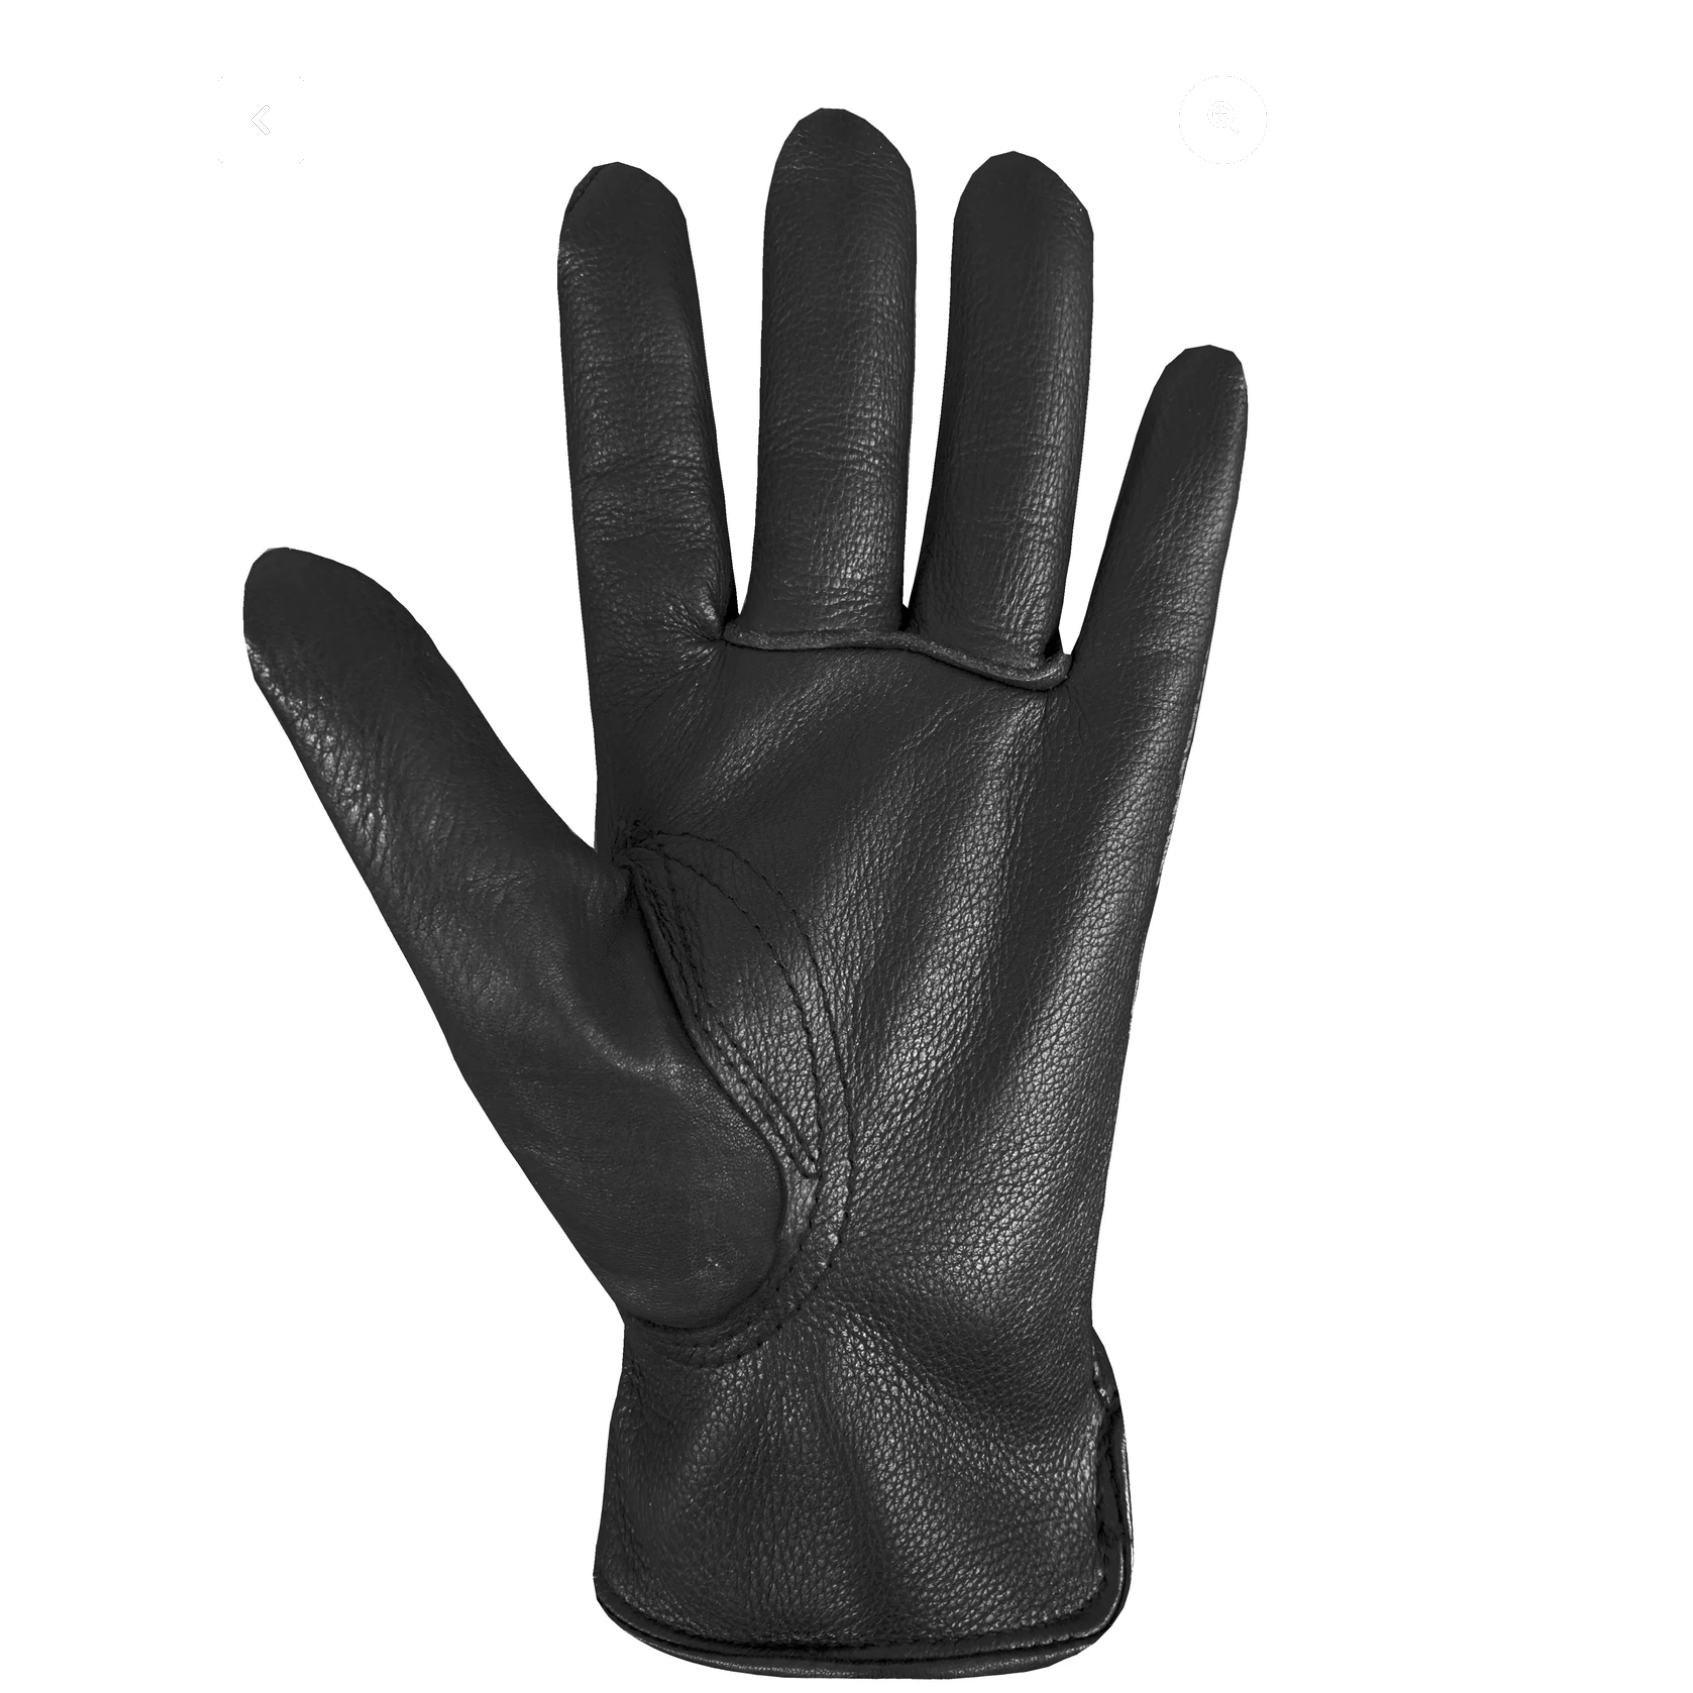 Men's Driver Style Glove